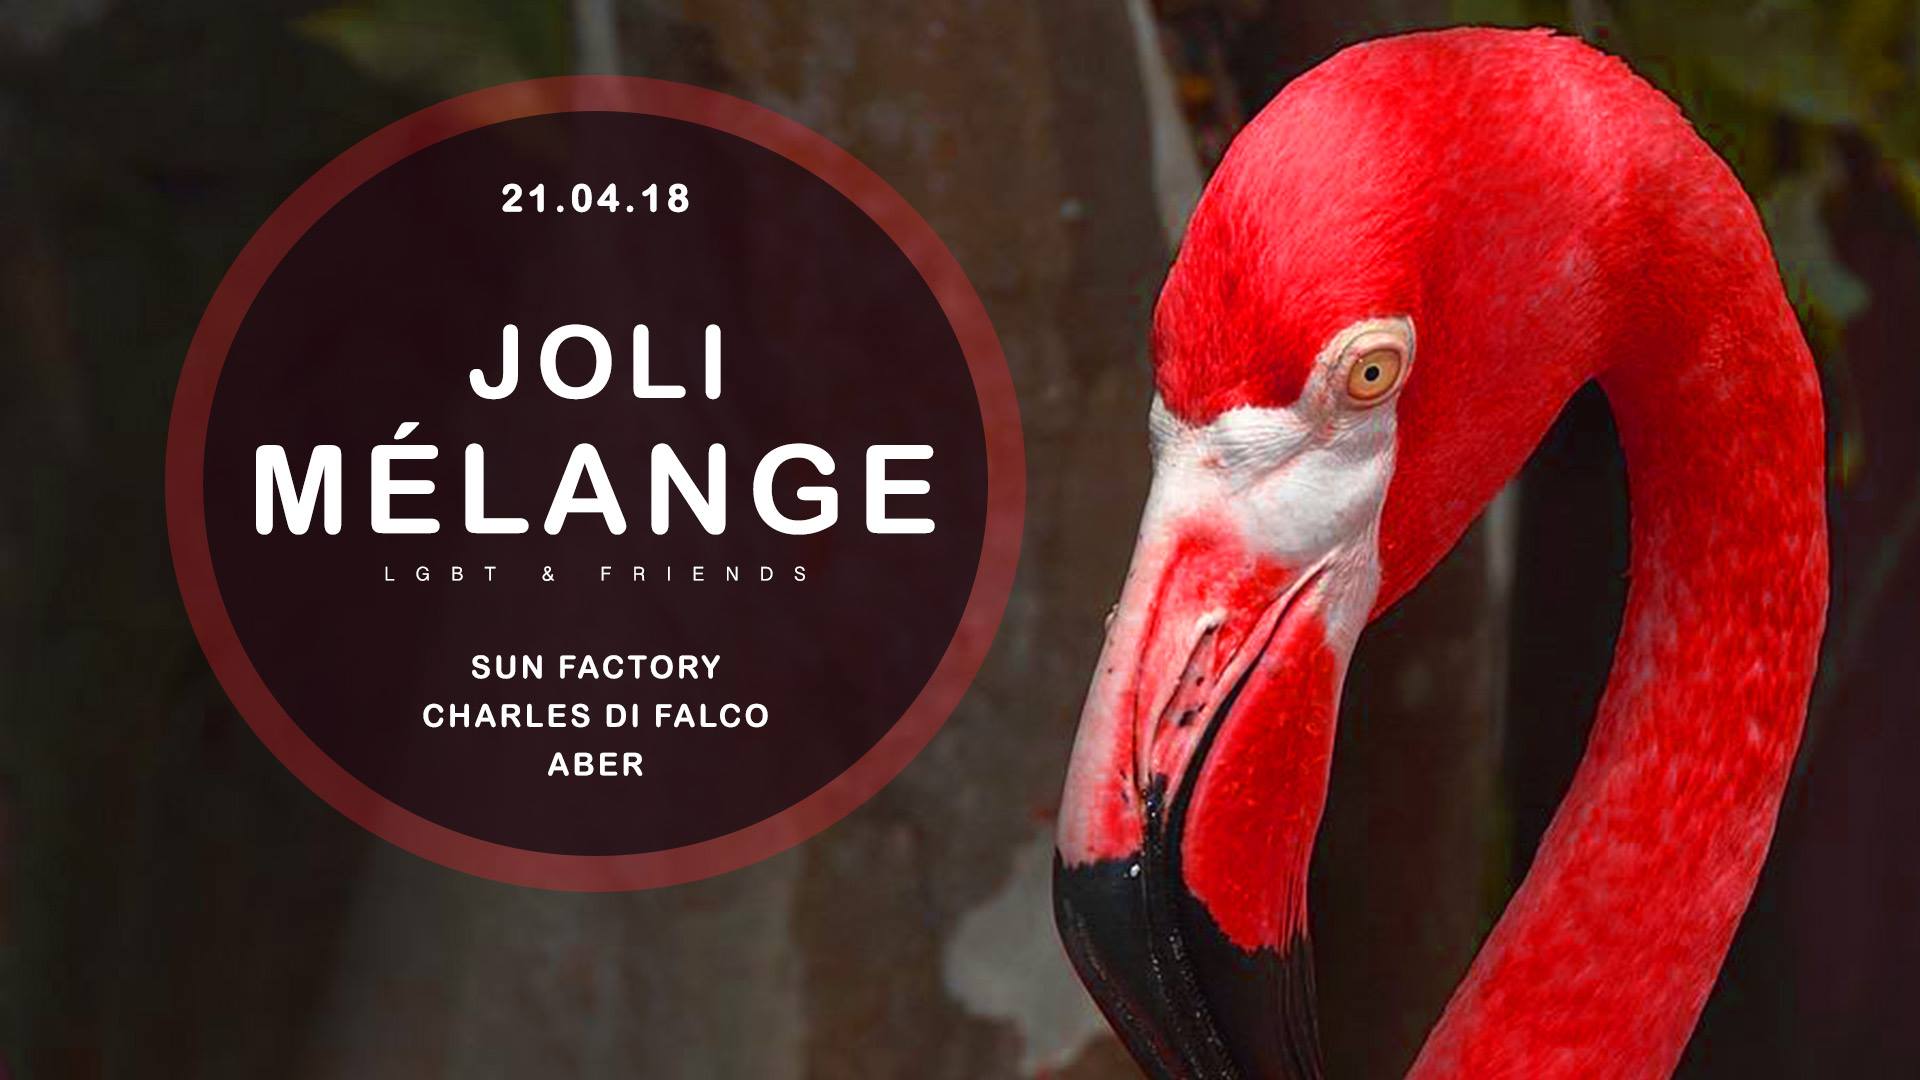 Joli mélange f2 saint-étienne sun factory charles di falco aber samedi 21 avril 2018